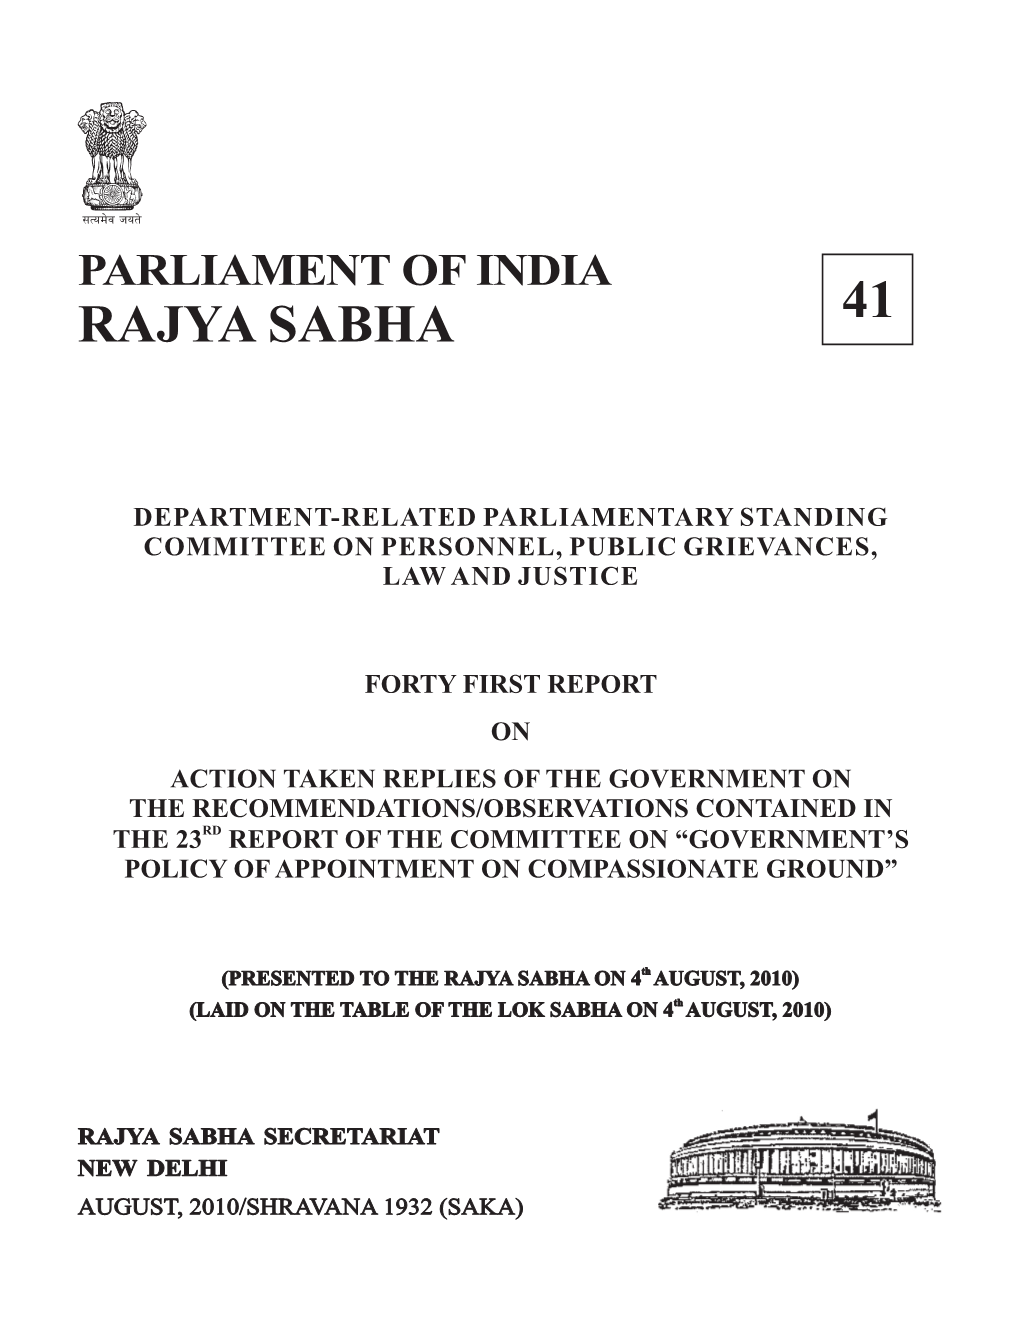 Parliament of India Rajya Sabha 41